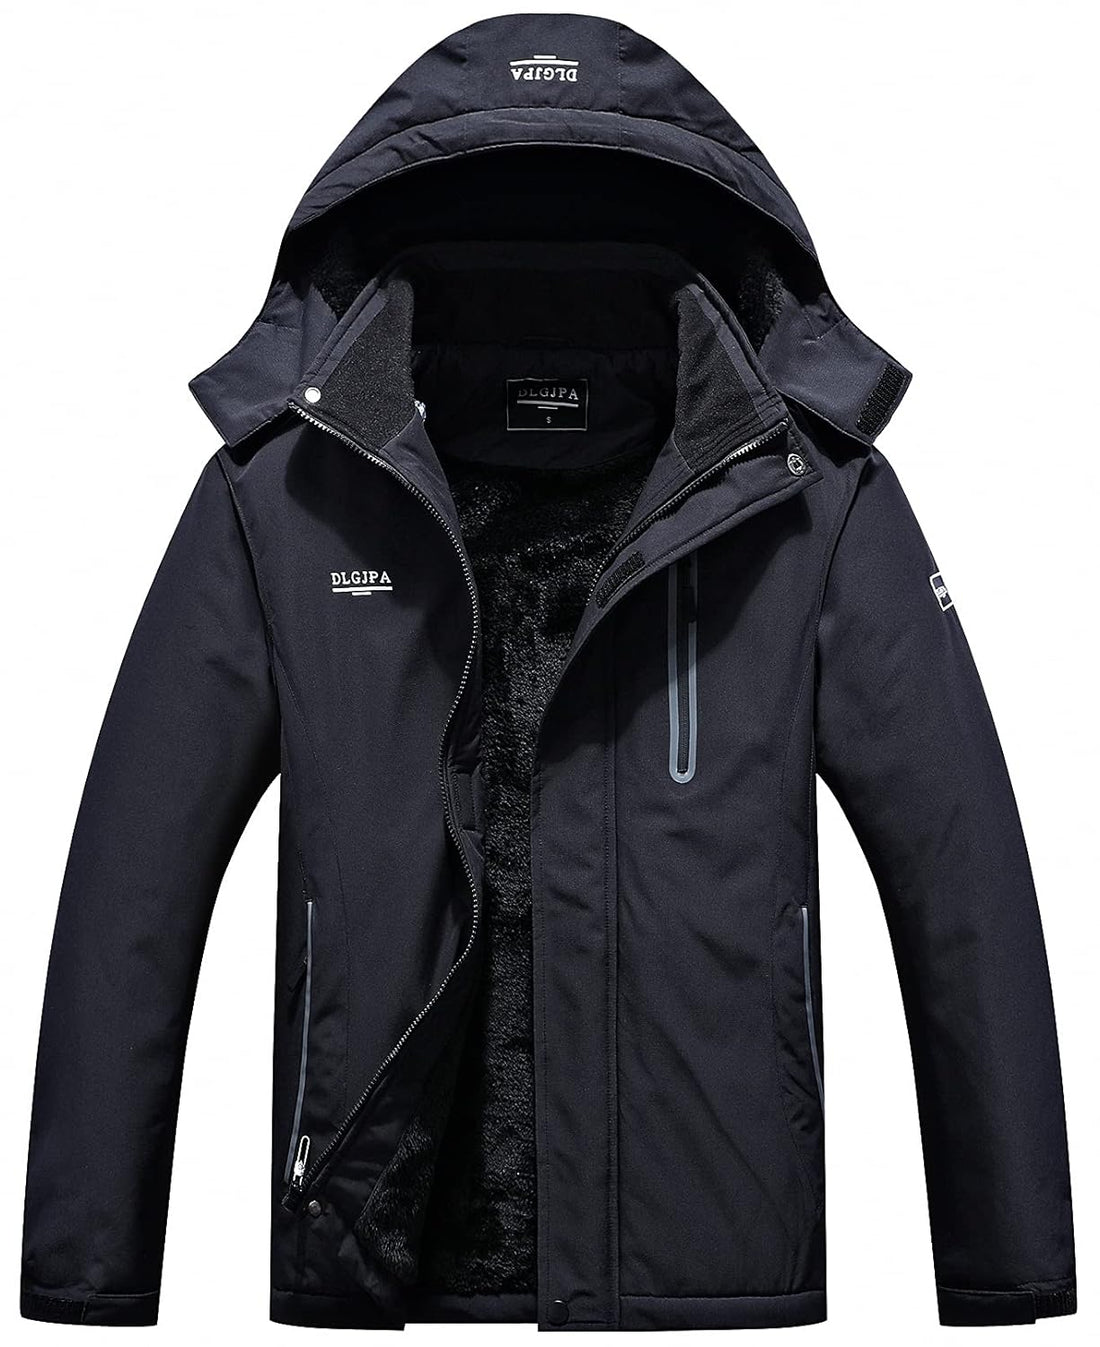 DLGJPA Men's Mountain Waterproof Ski Jacket Detachable Hood Windproof Rain Winter Warm Snow Coat